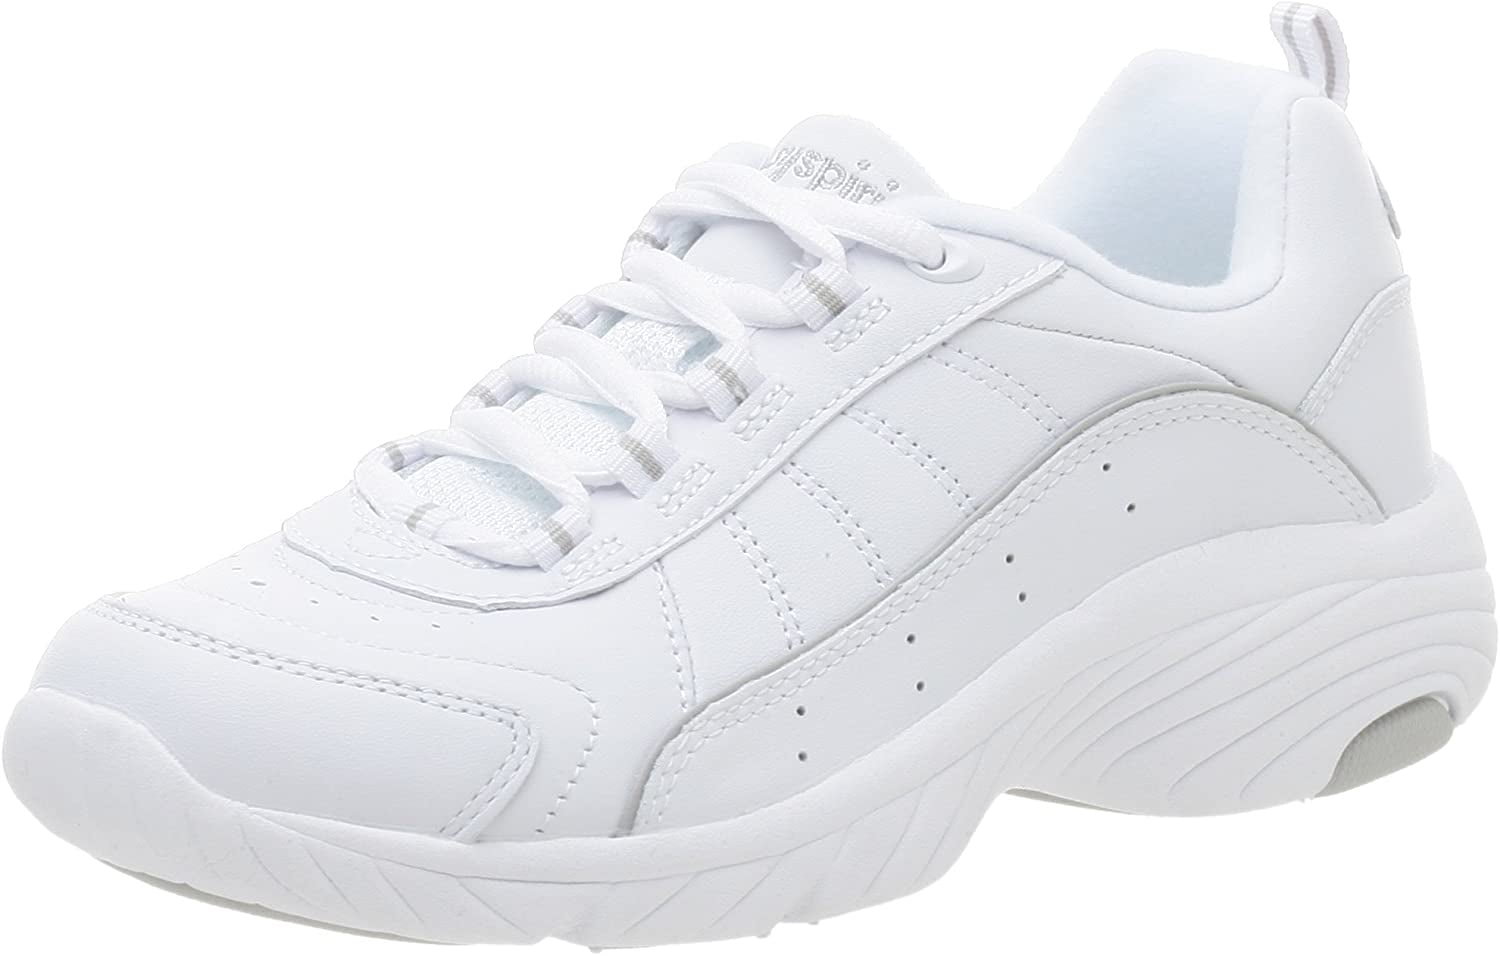 Athletic Shoe,White/Light Grey,7 WW 